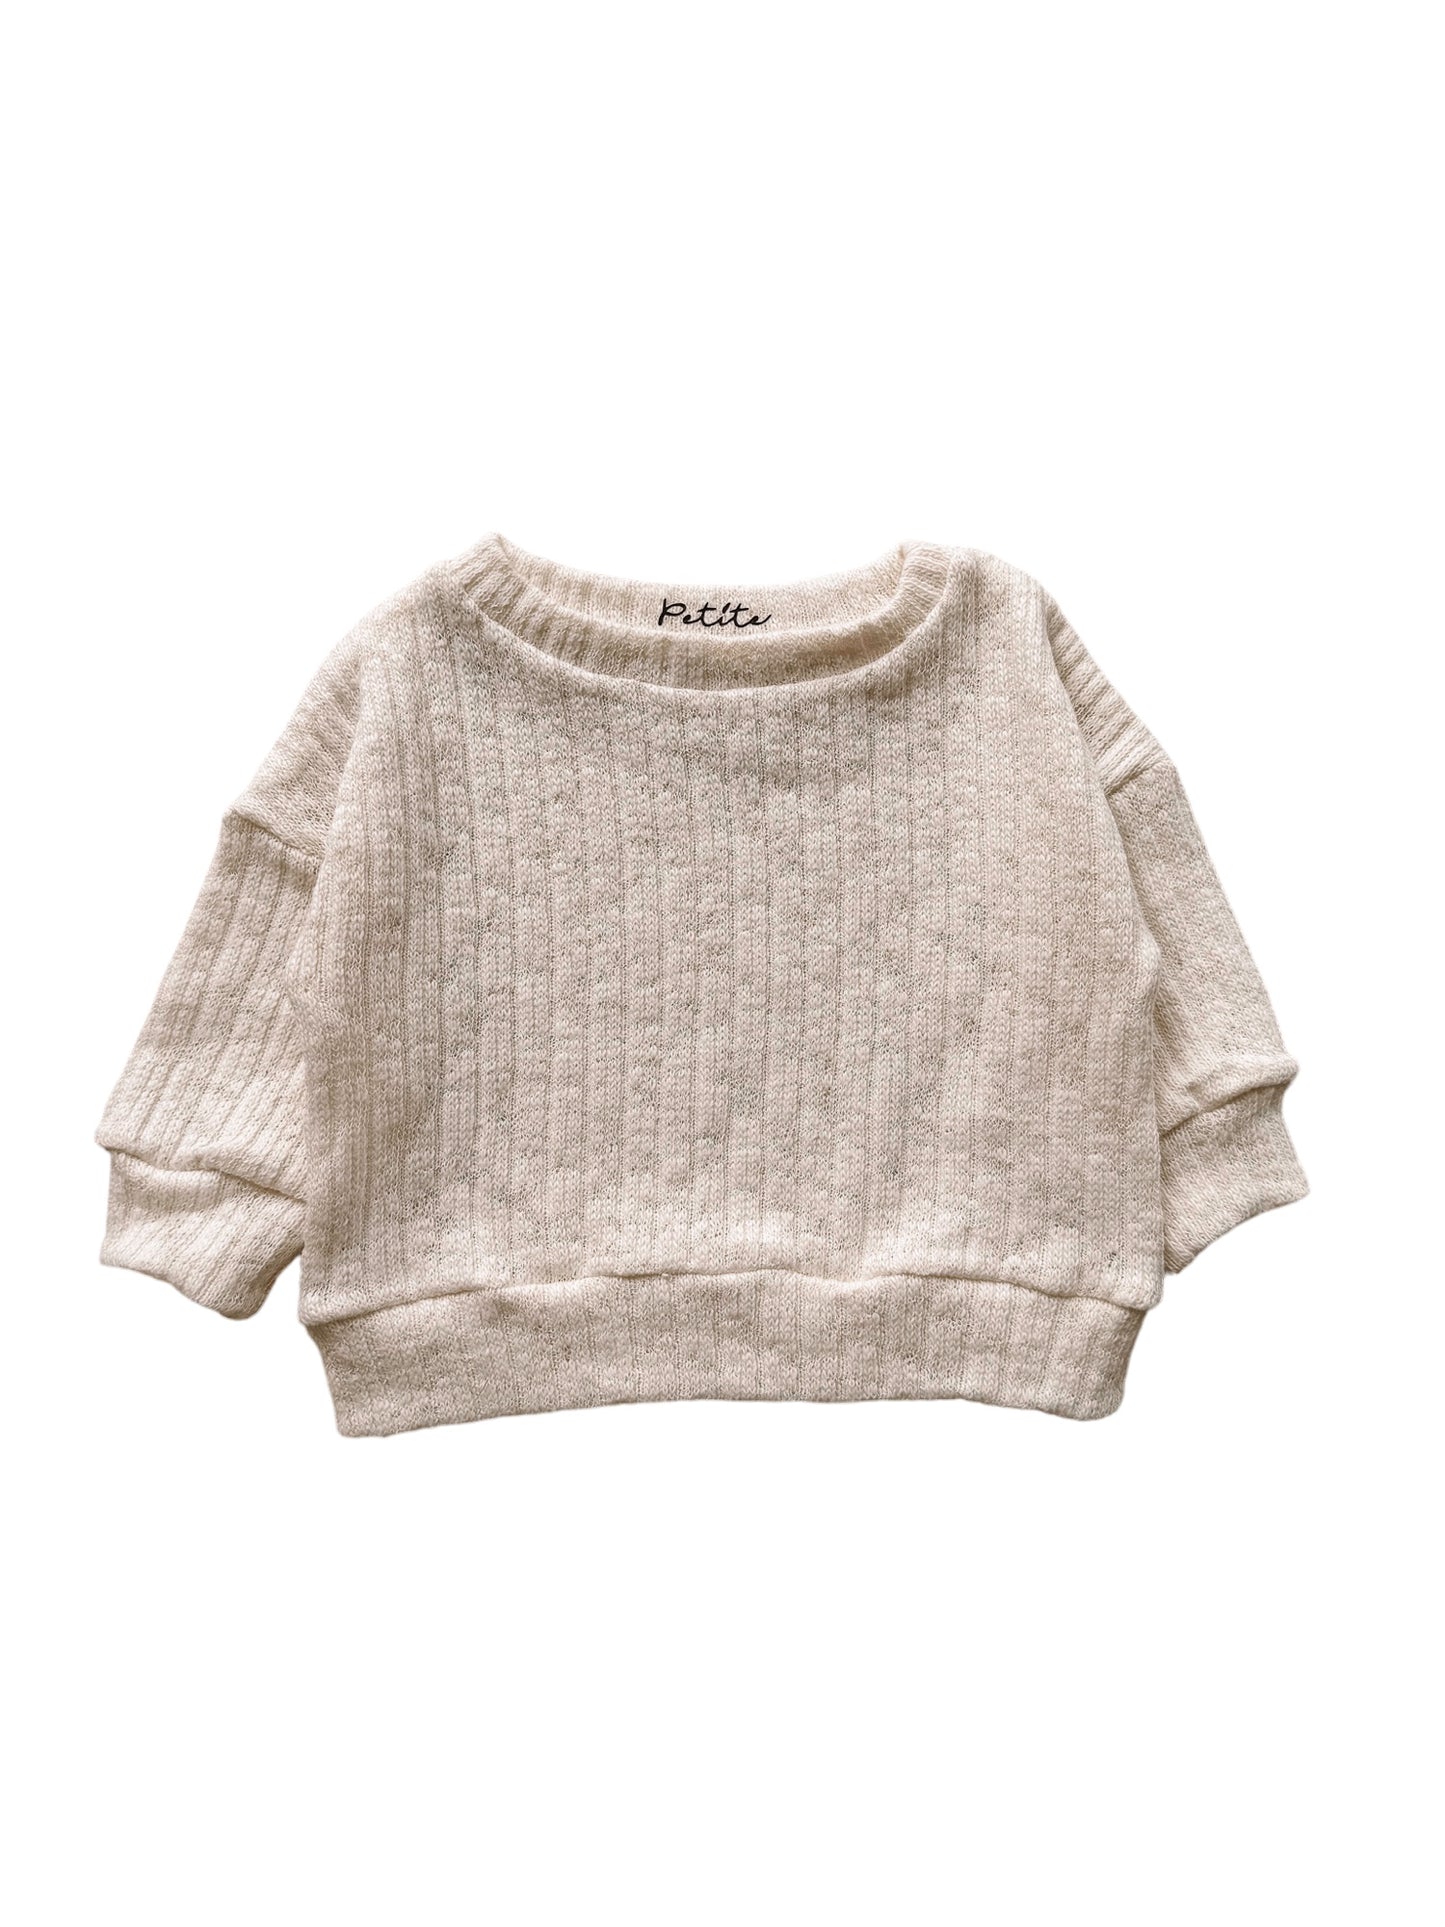 Cotton knit sweater / ecru